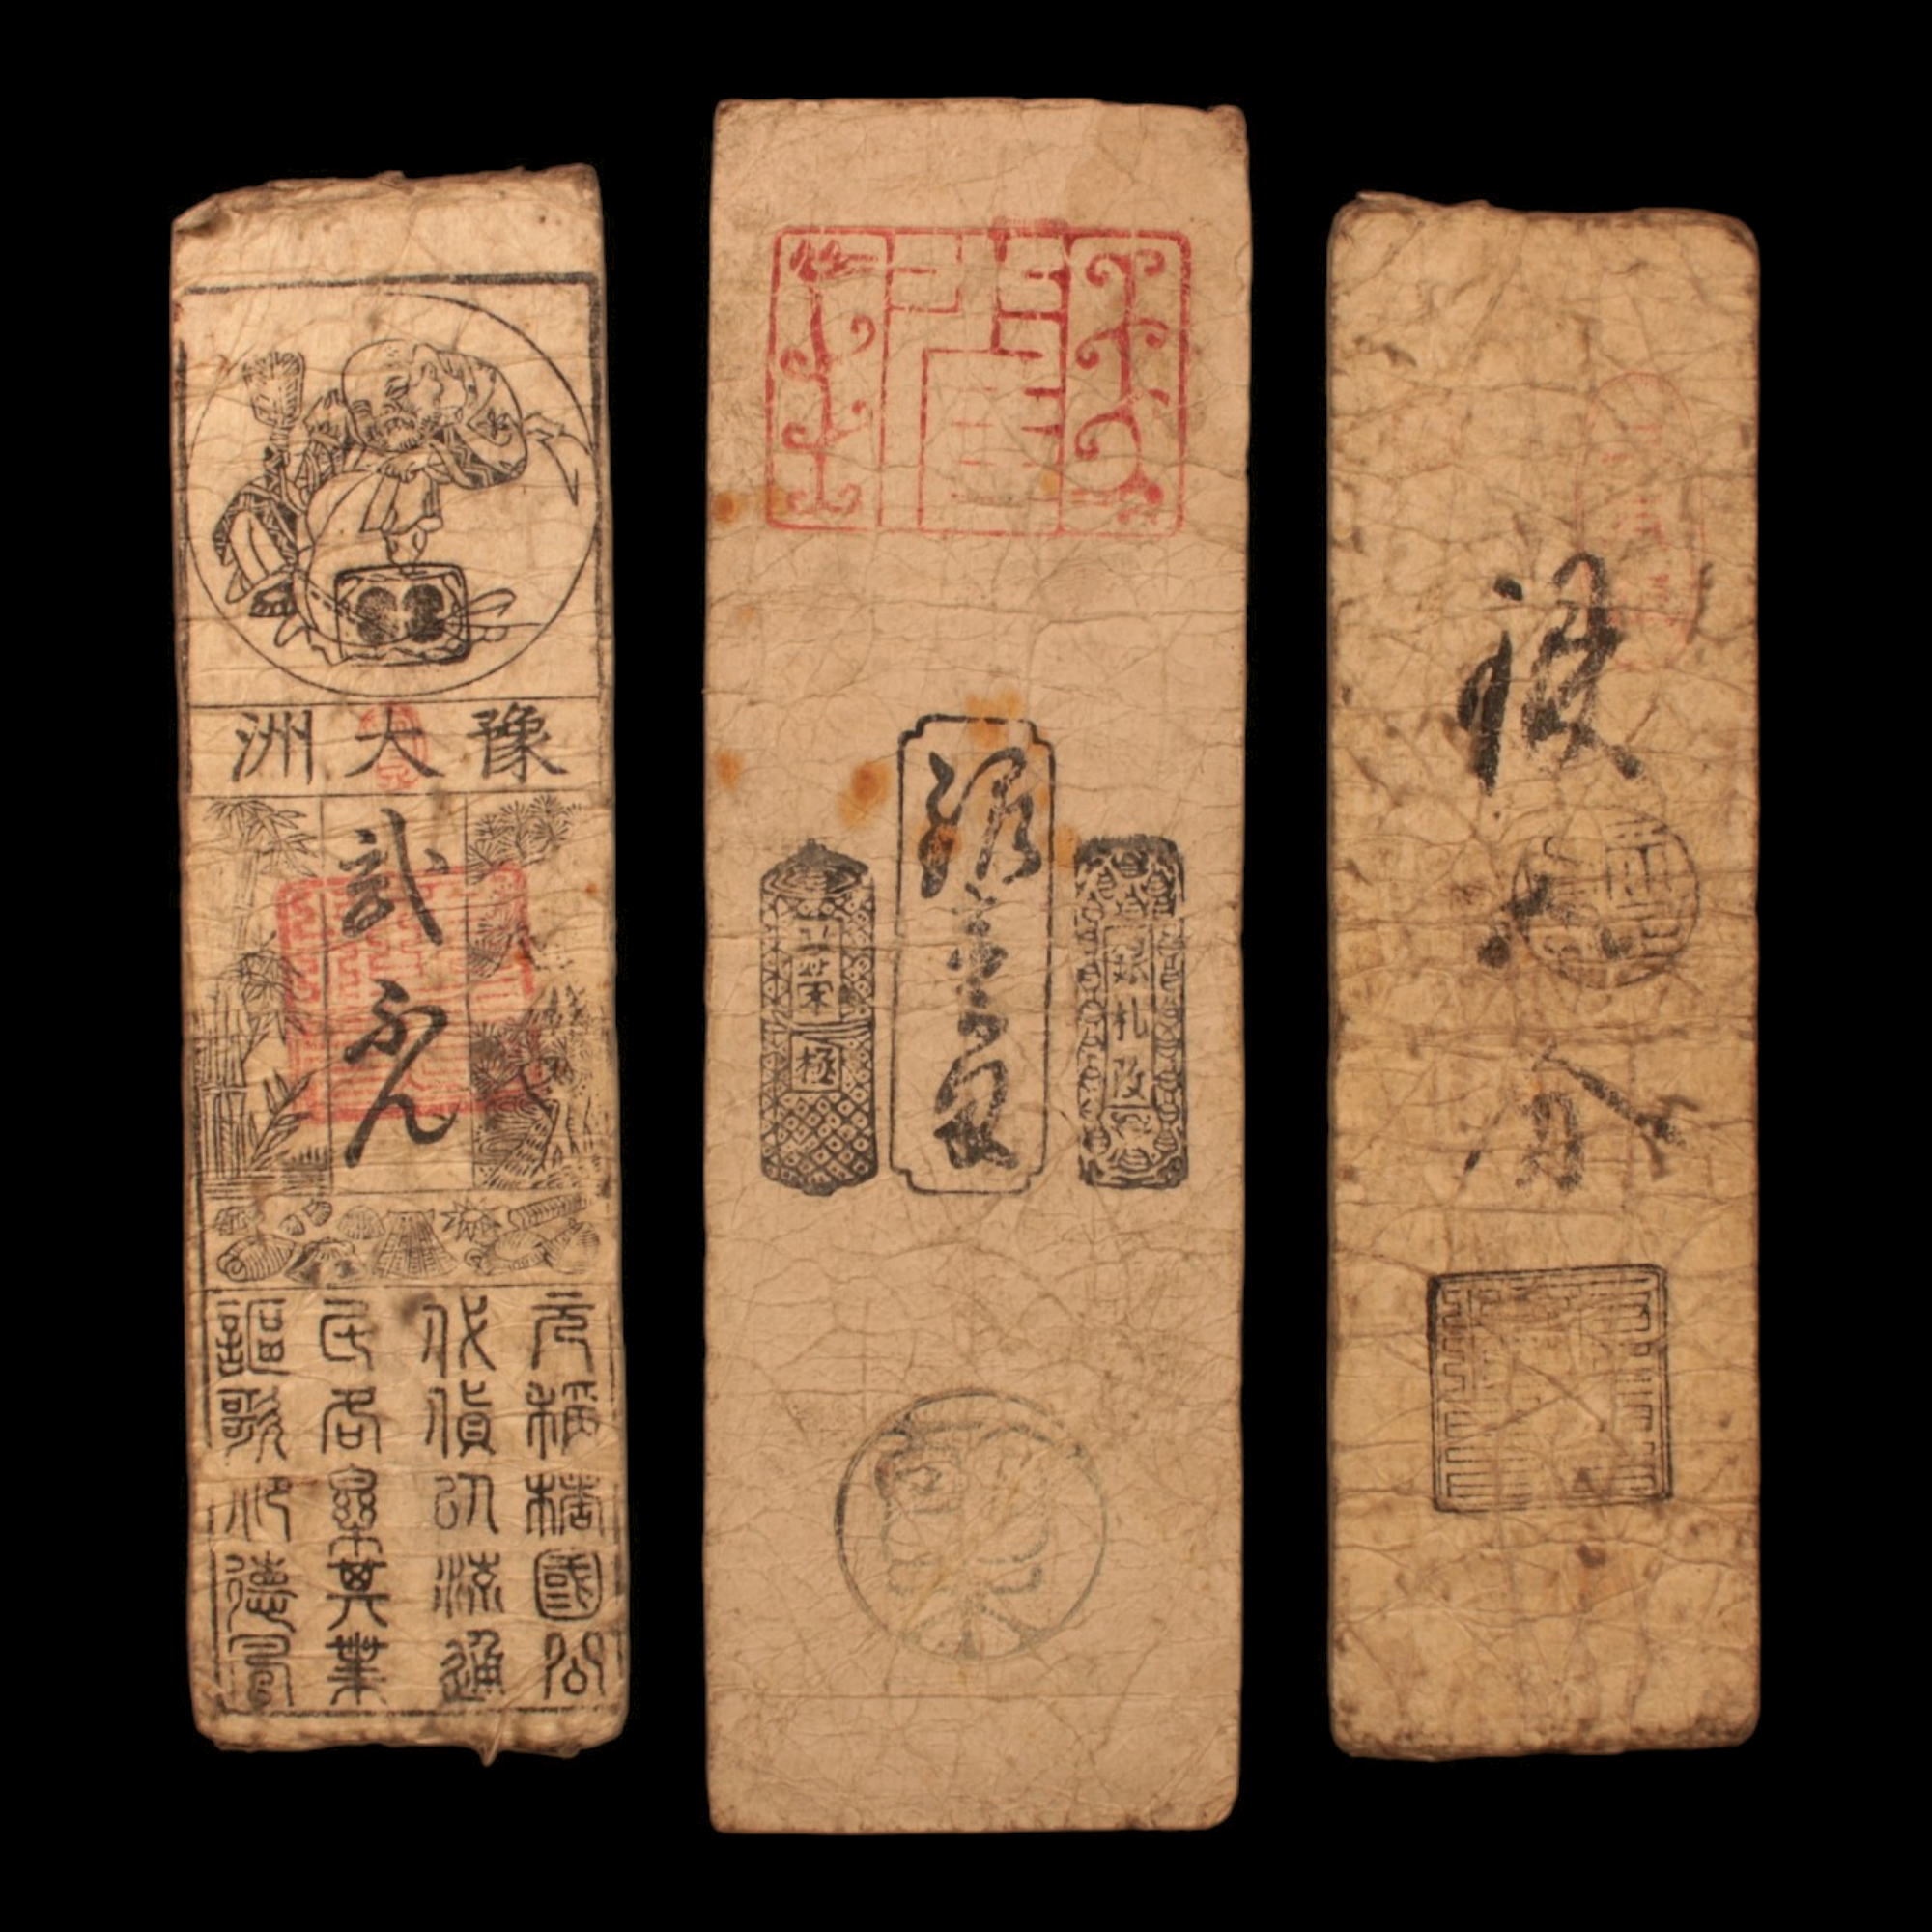 Lot of 3 Hansatsu, Paper Money - c. 1750 to 1870 CE - Japan